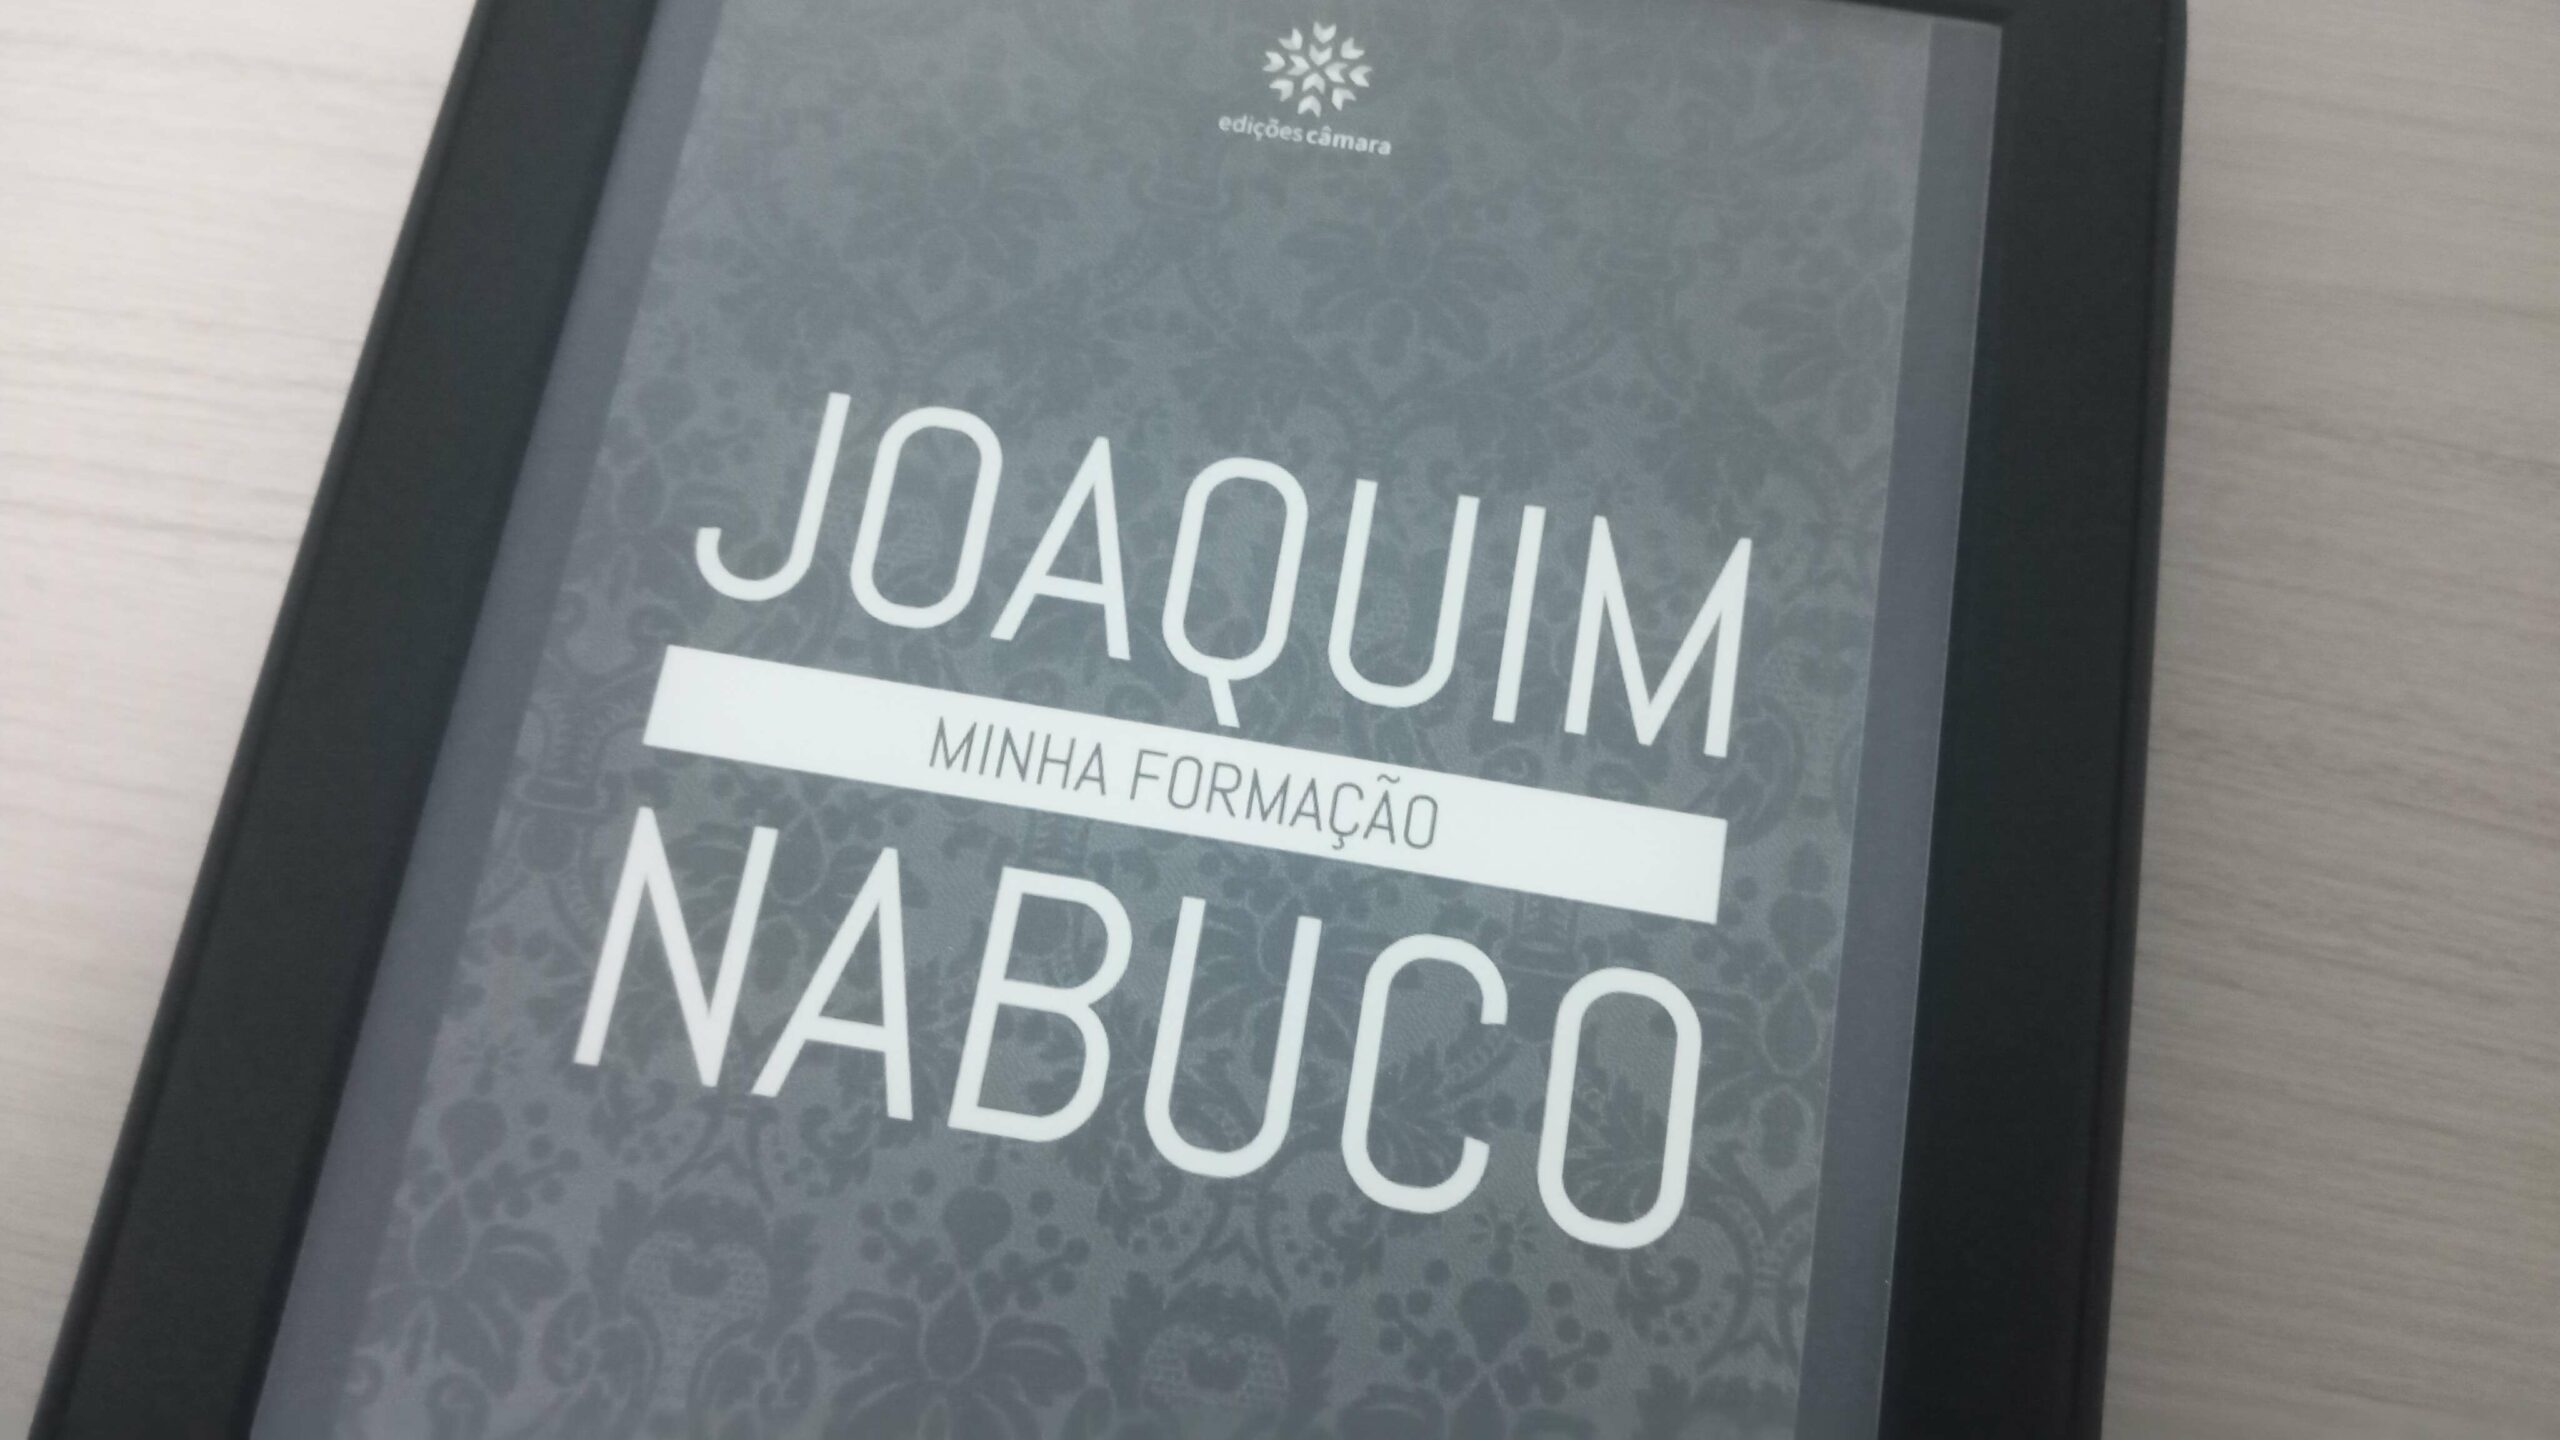 My Formation (Joaquim Nabuco)